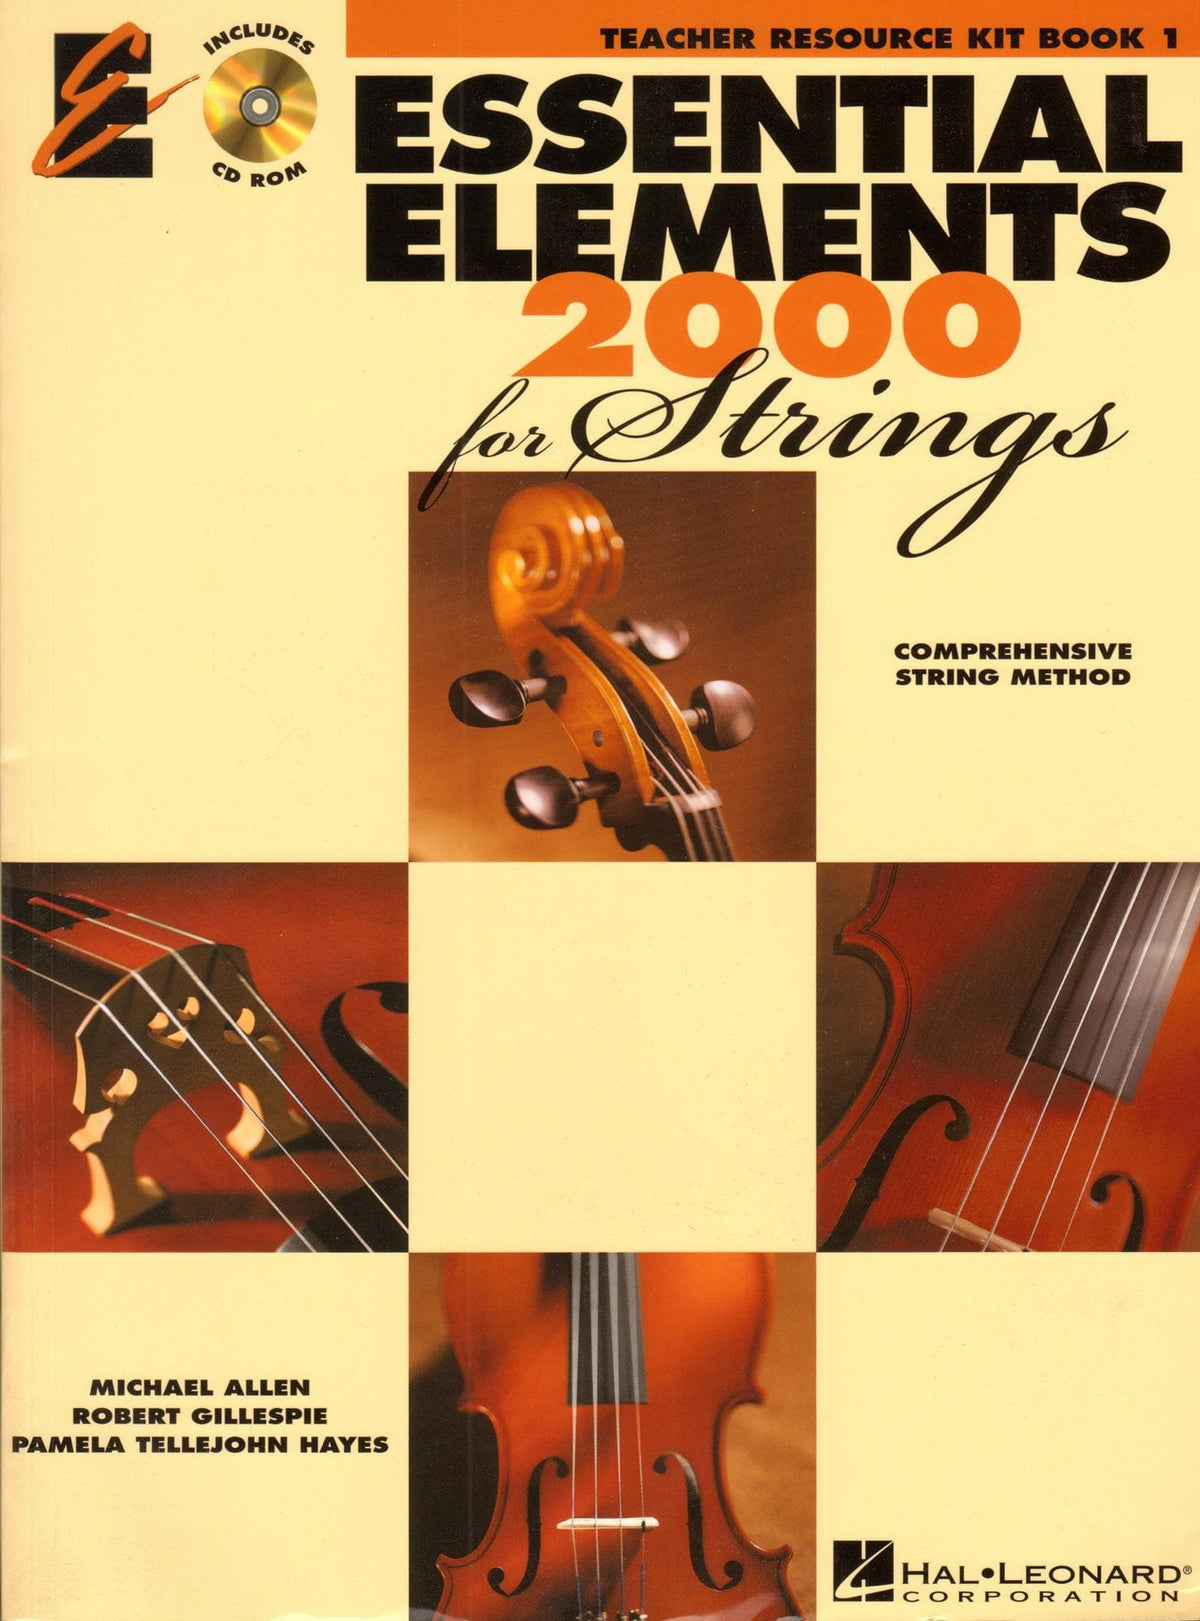 Essential Elements 2000 for Strings - Teacher Resource Kit Book 1 - Book/CD-ROM set - by Allen/Gillespie/Hayes - Hal Leonard Publication